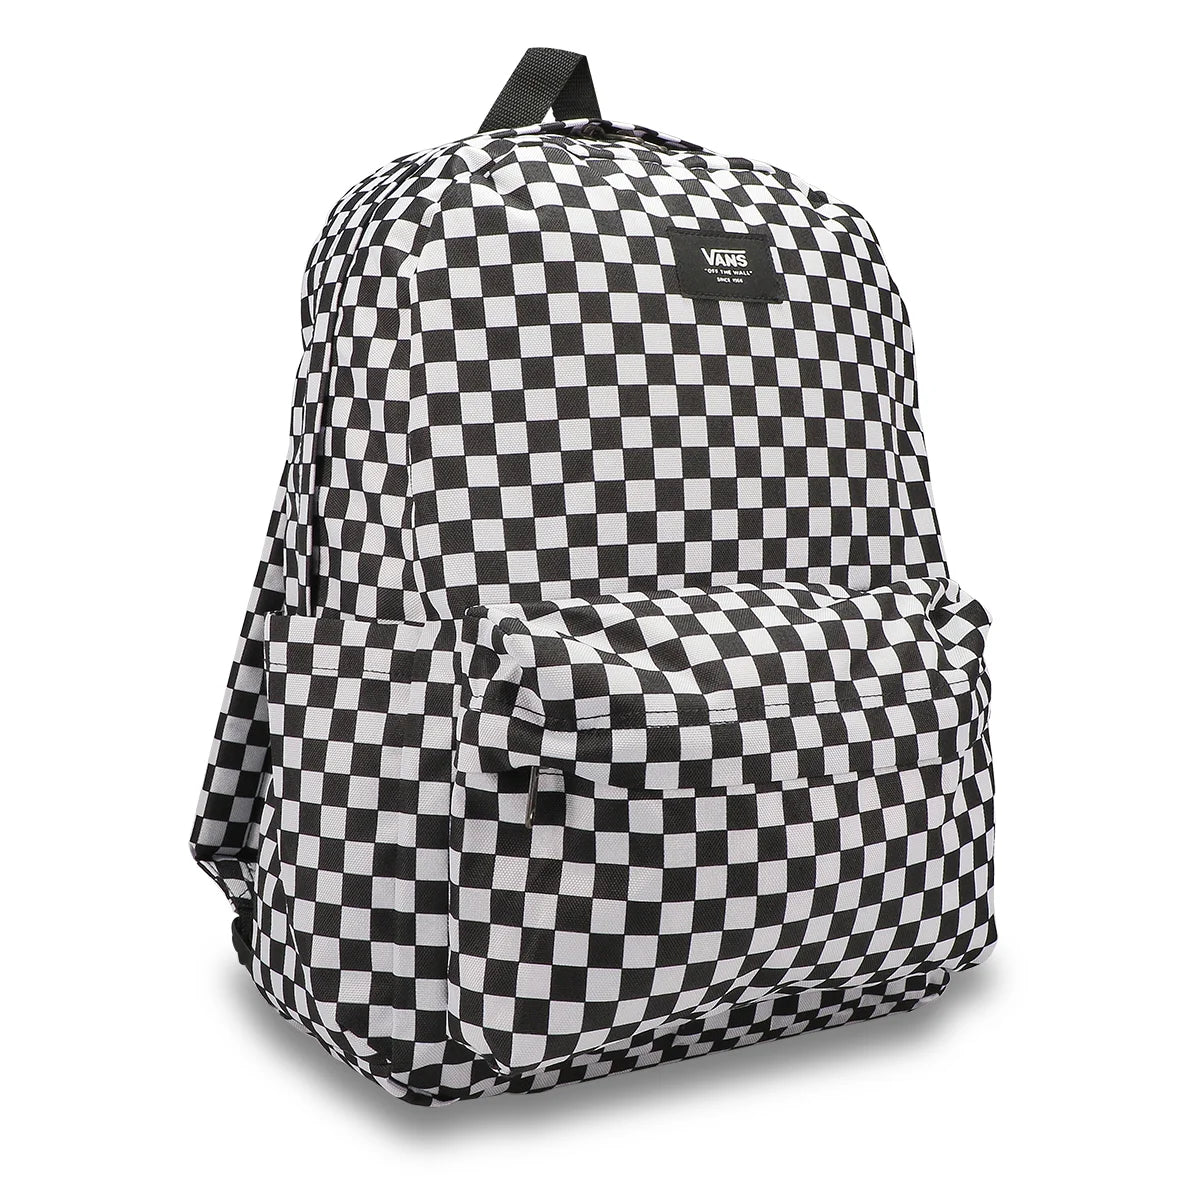 VANS Old Skool H2O Check Backpack - Black/White